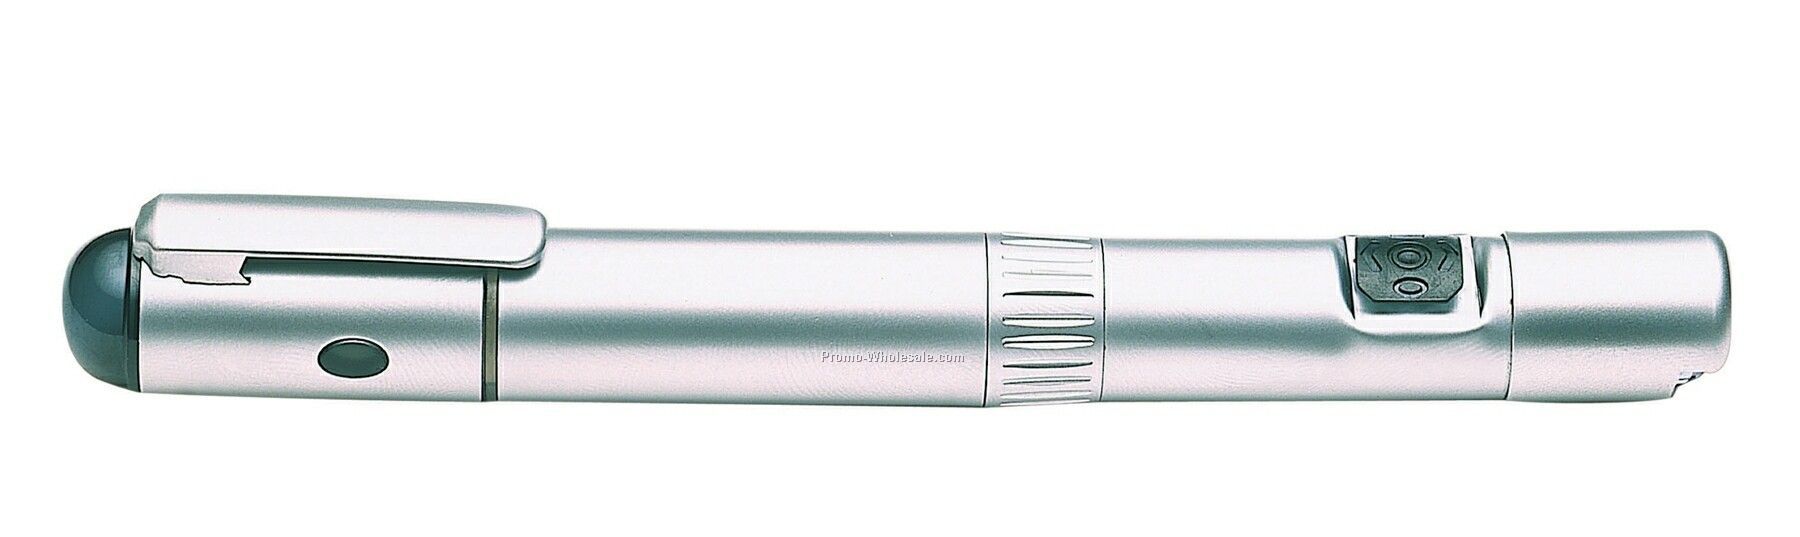 USB & Laser Presentation Pen